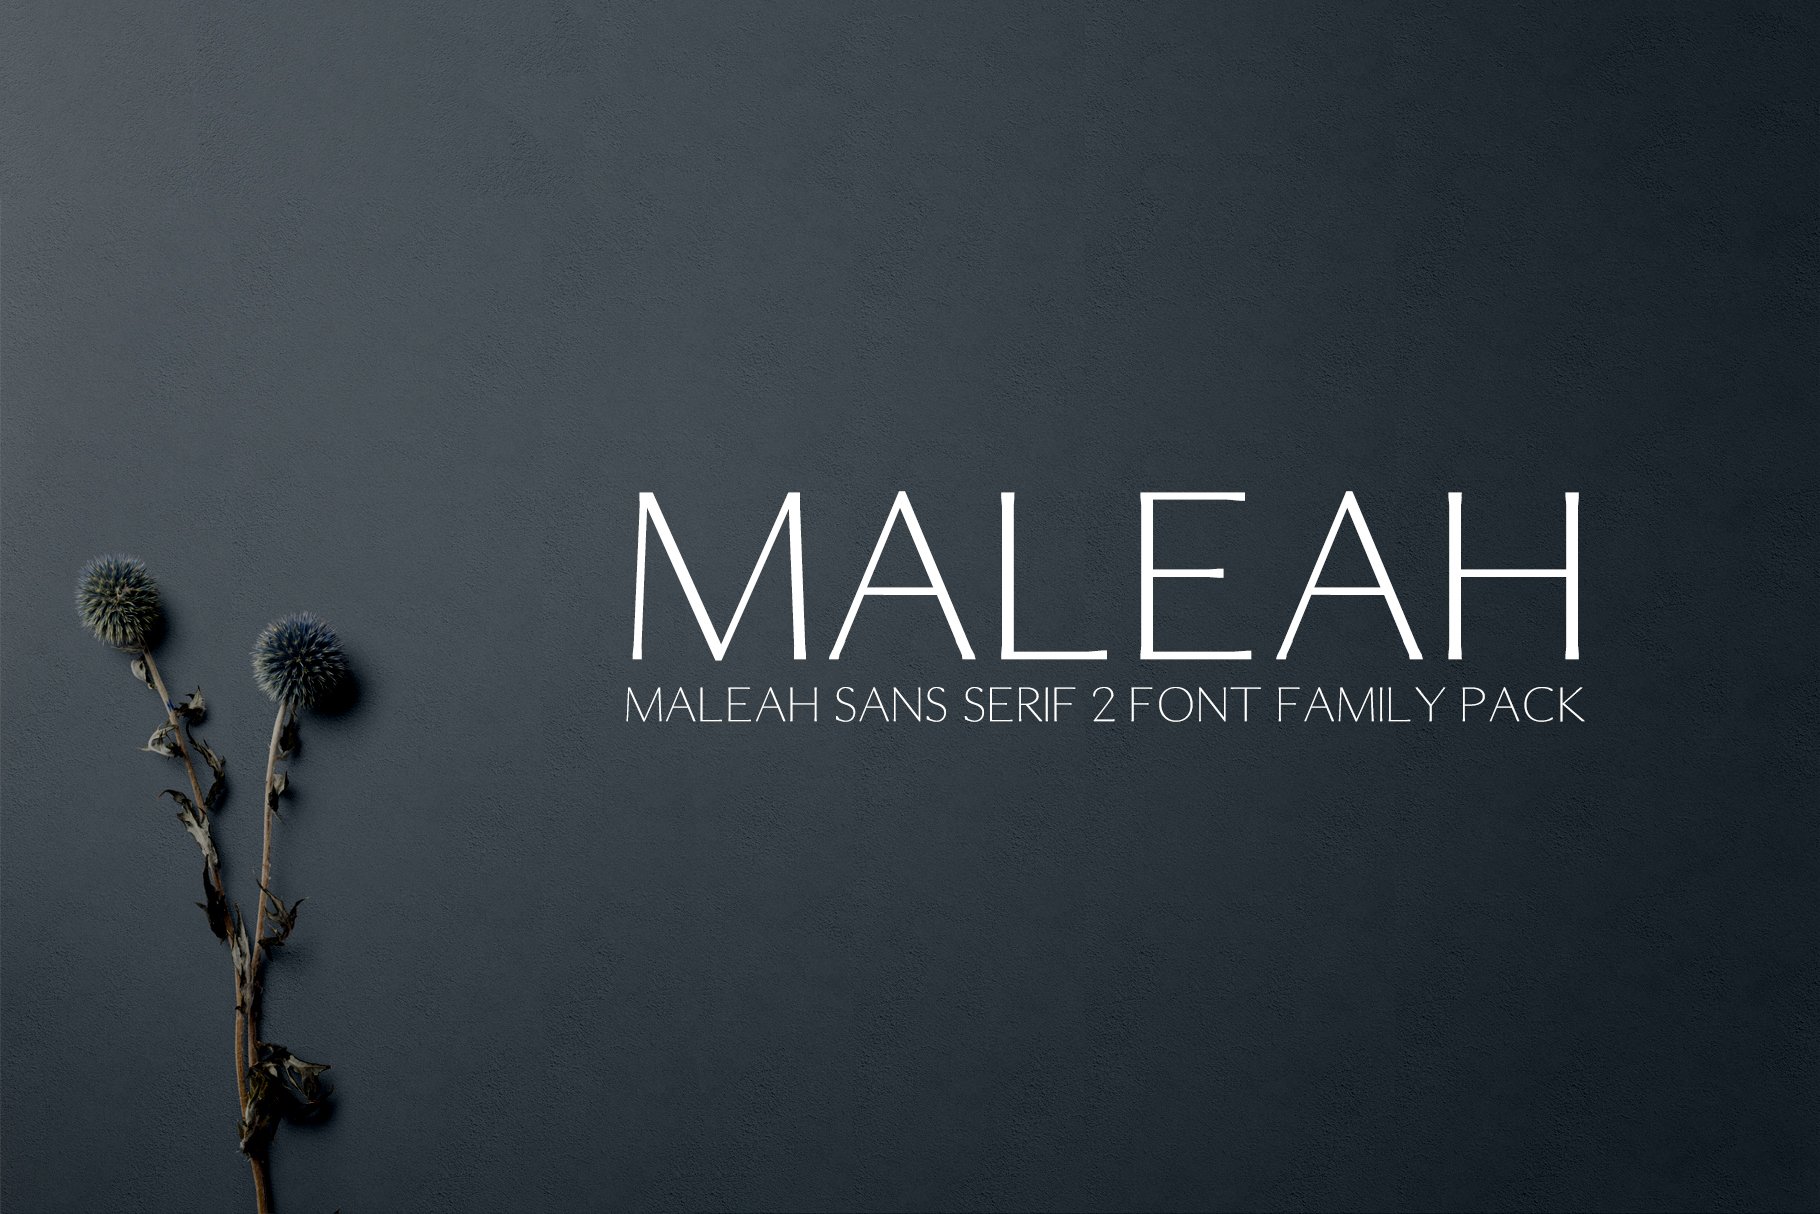 Maleah Sans Serif 4 Font Family Pack cover image.